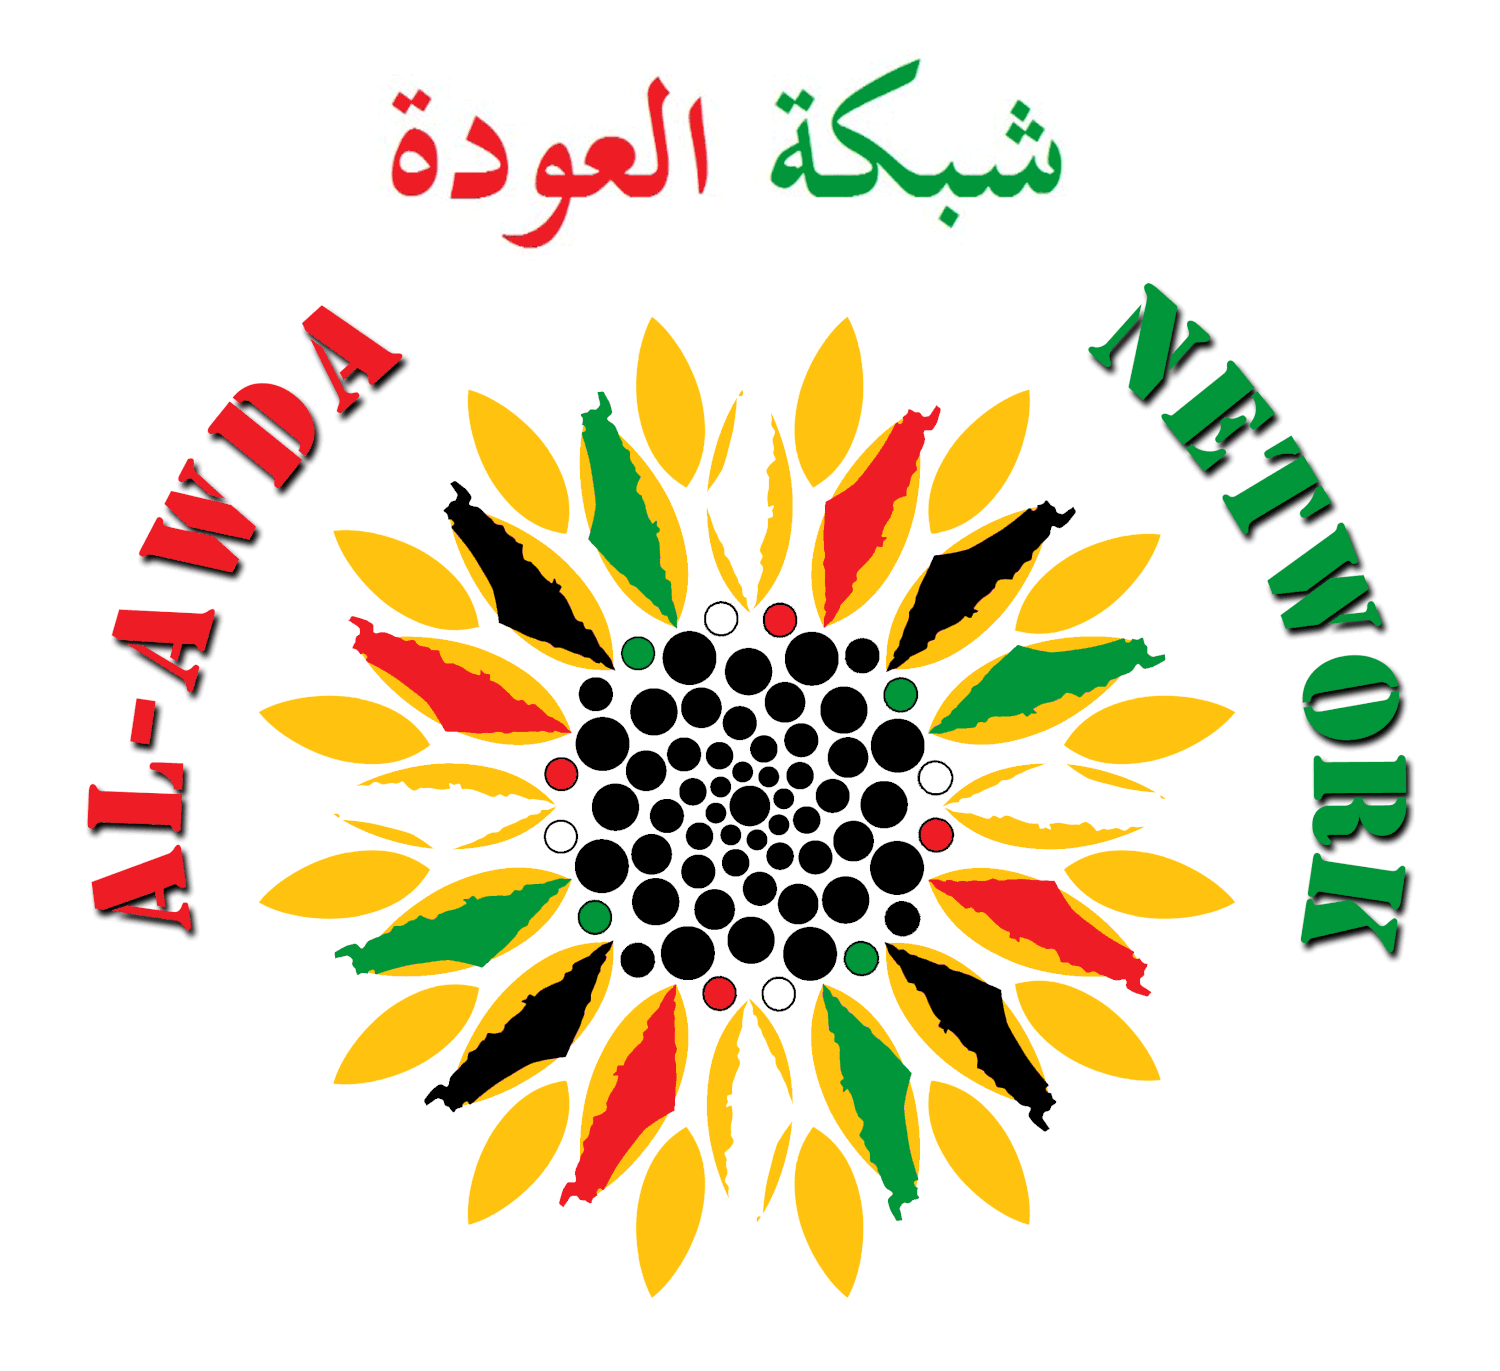 Al-Awda